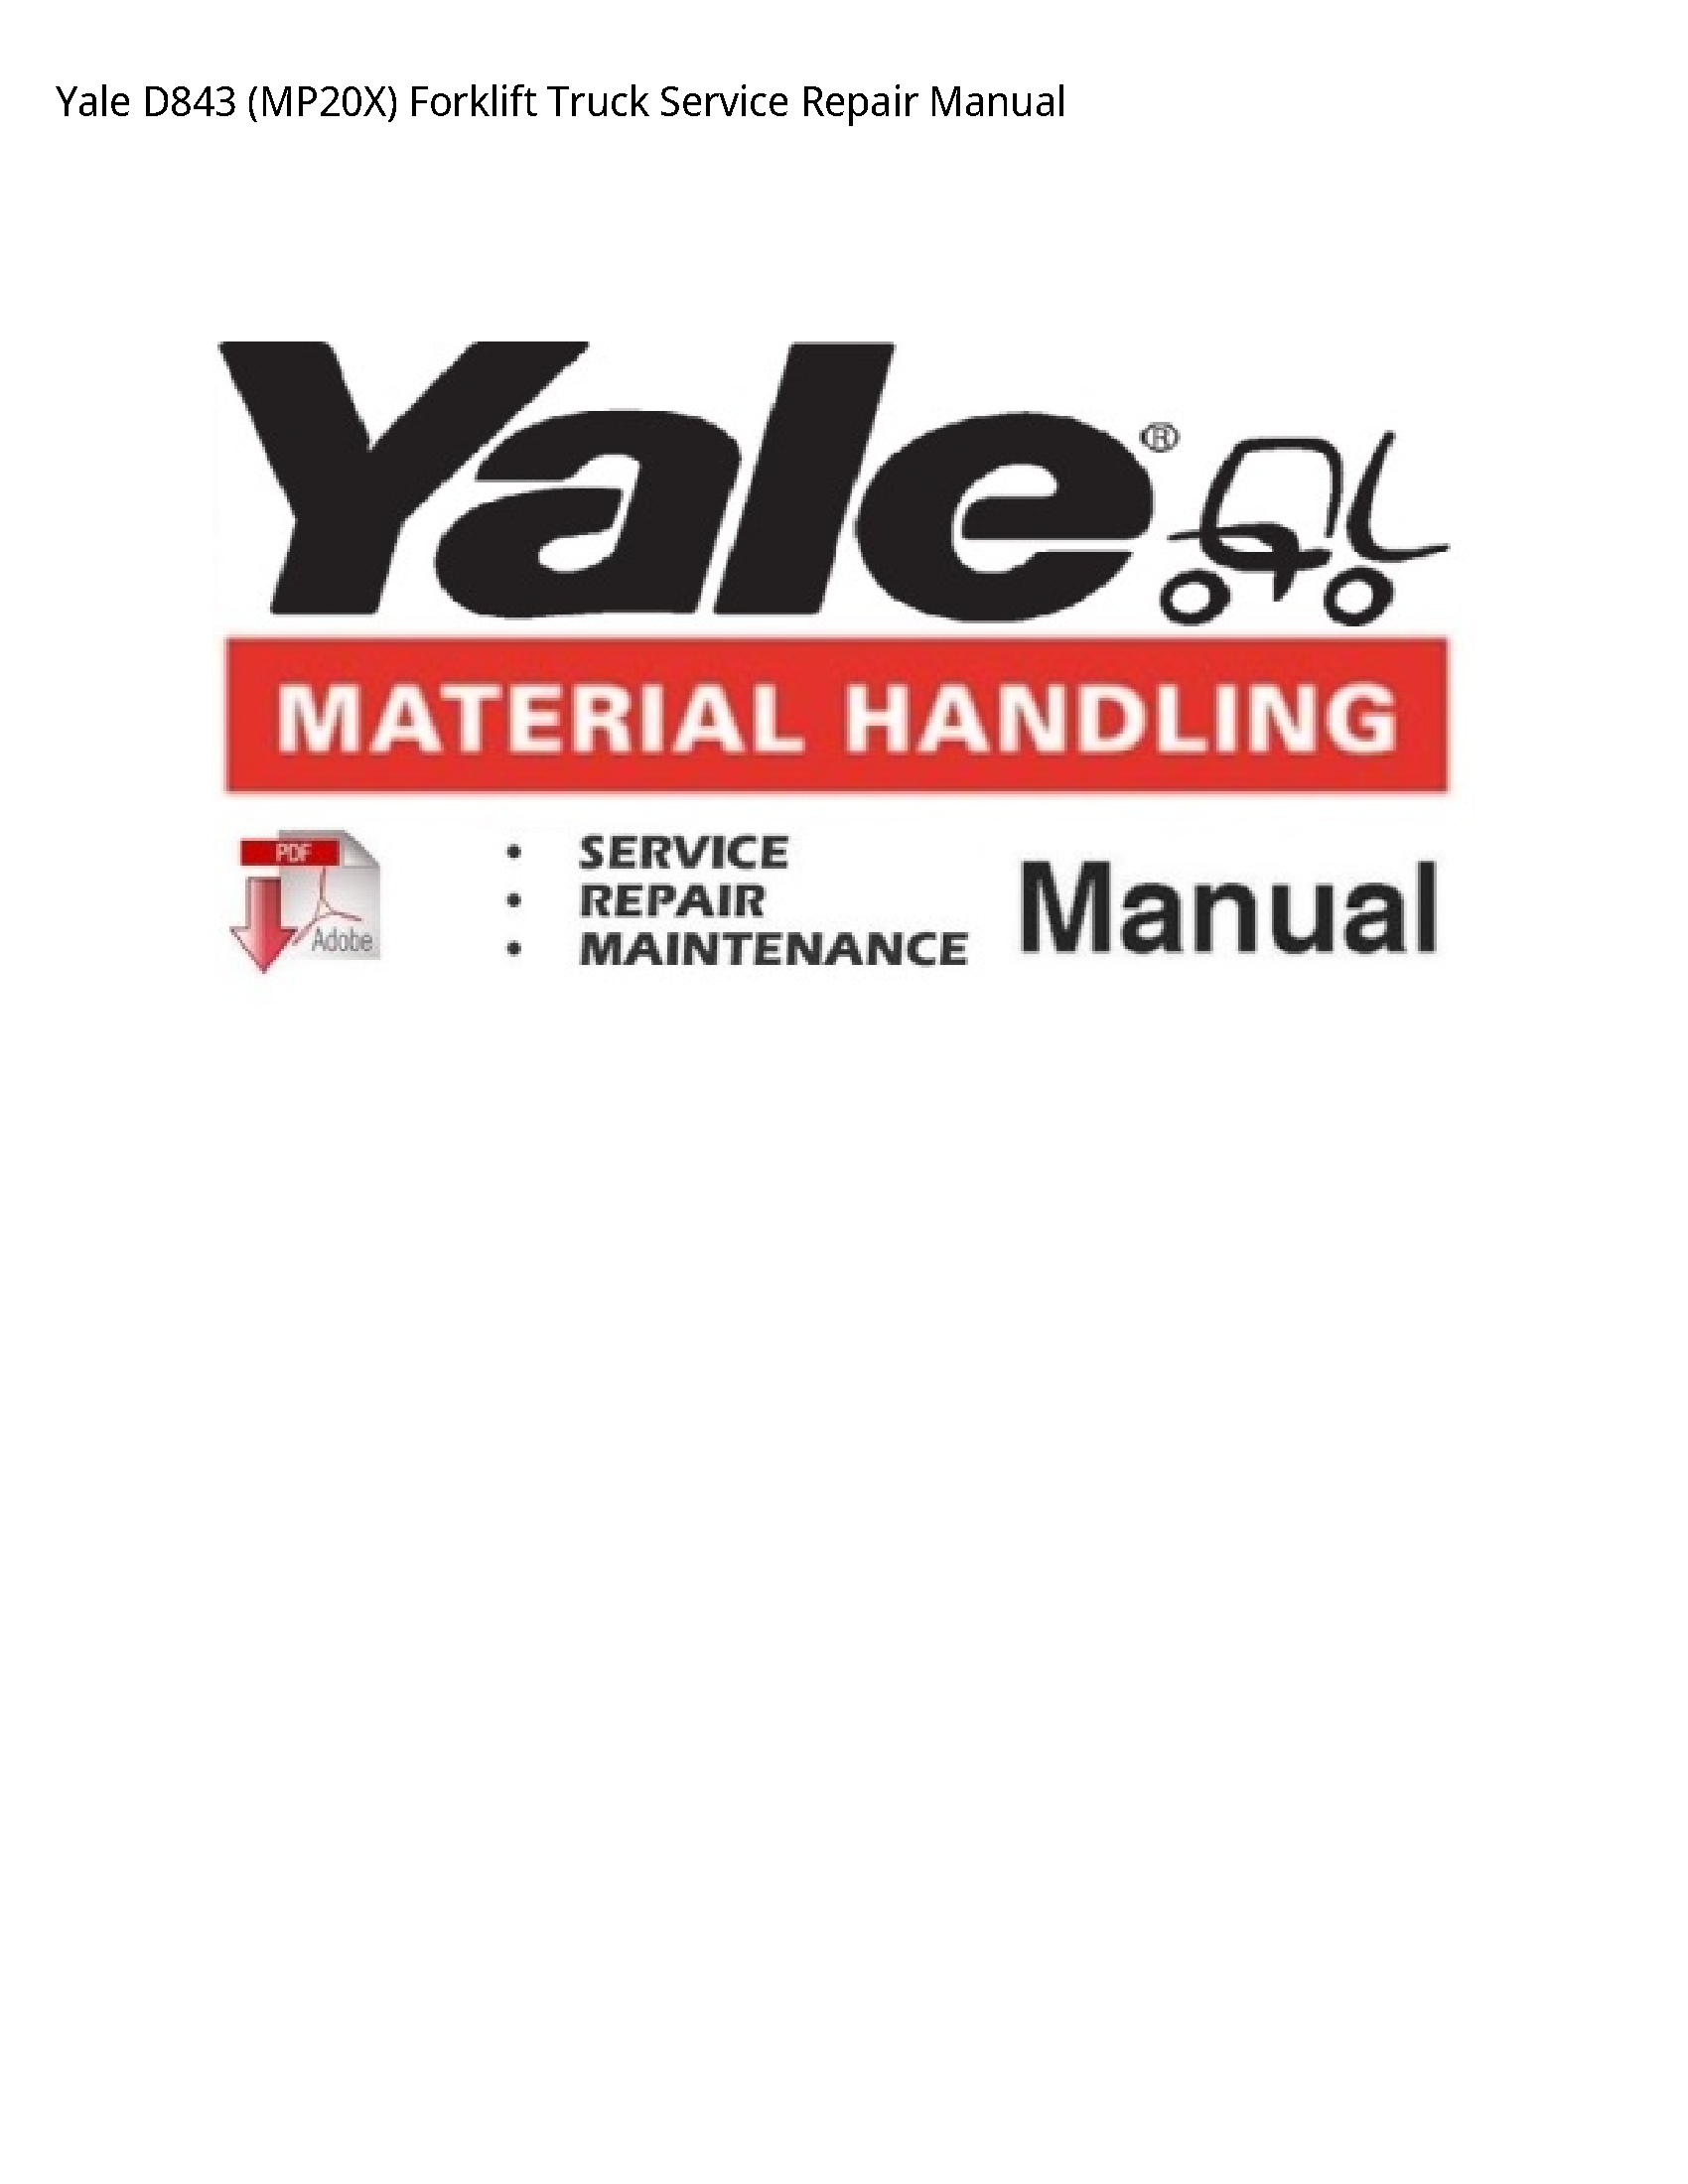 Yale D843 Forklift Truck manual